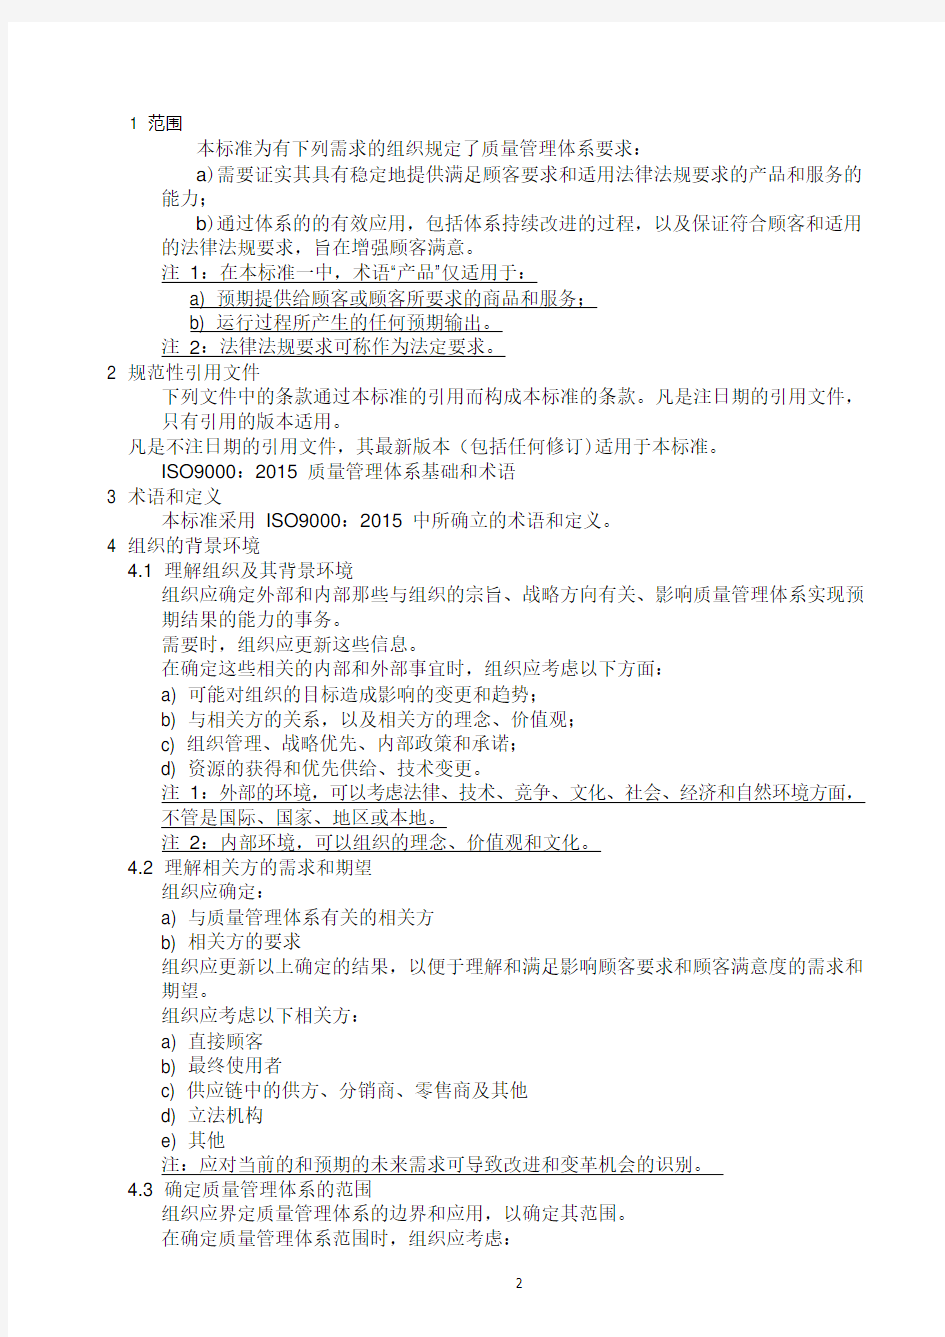 ISO90012015中文版完整.doc